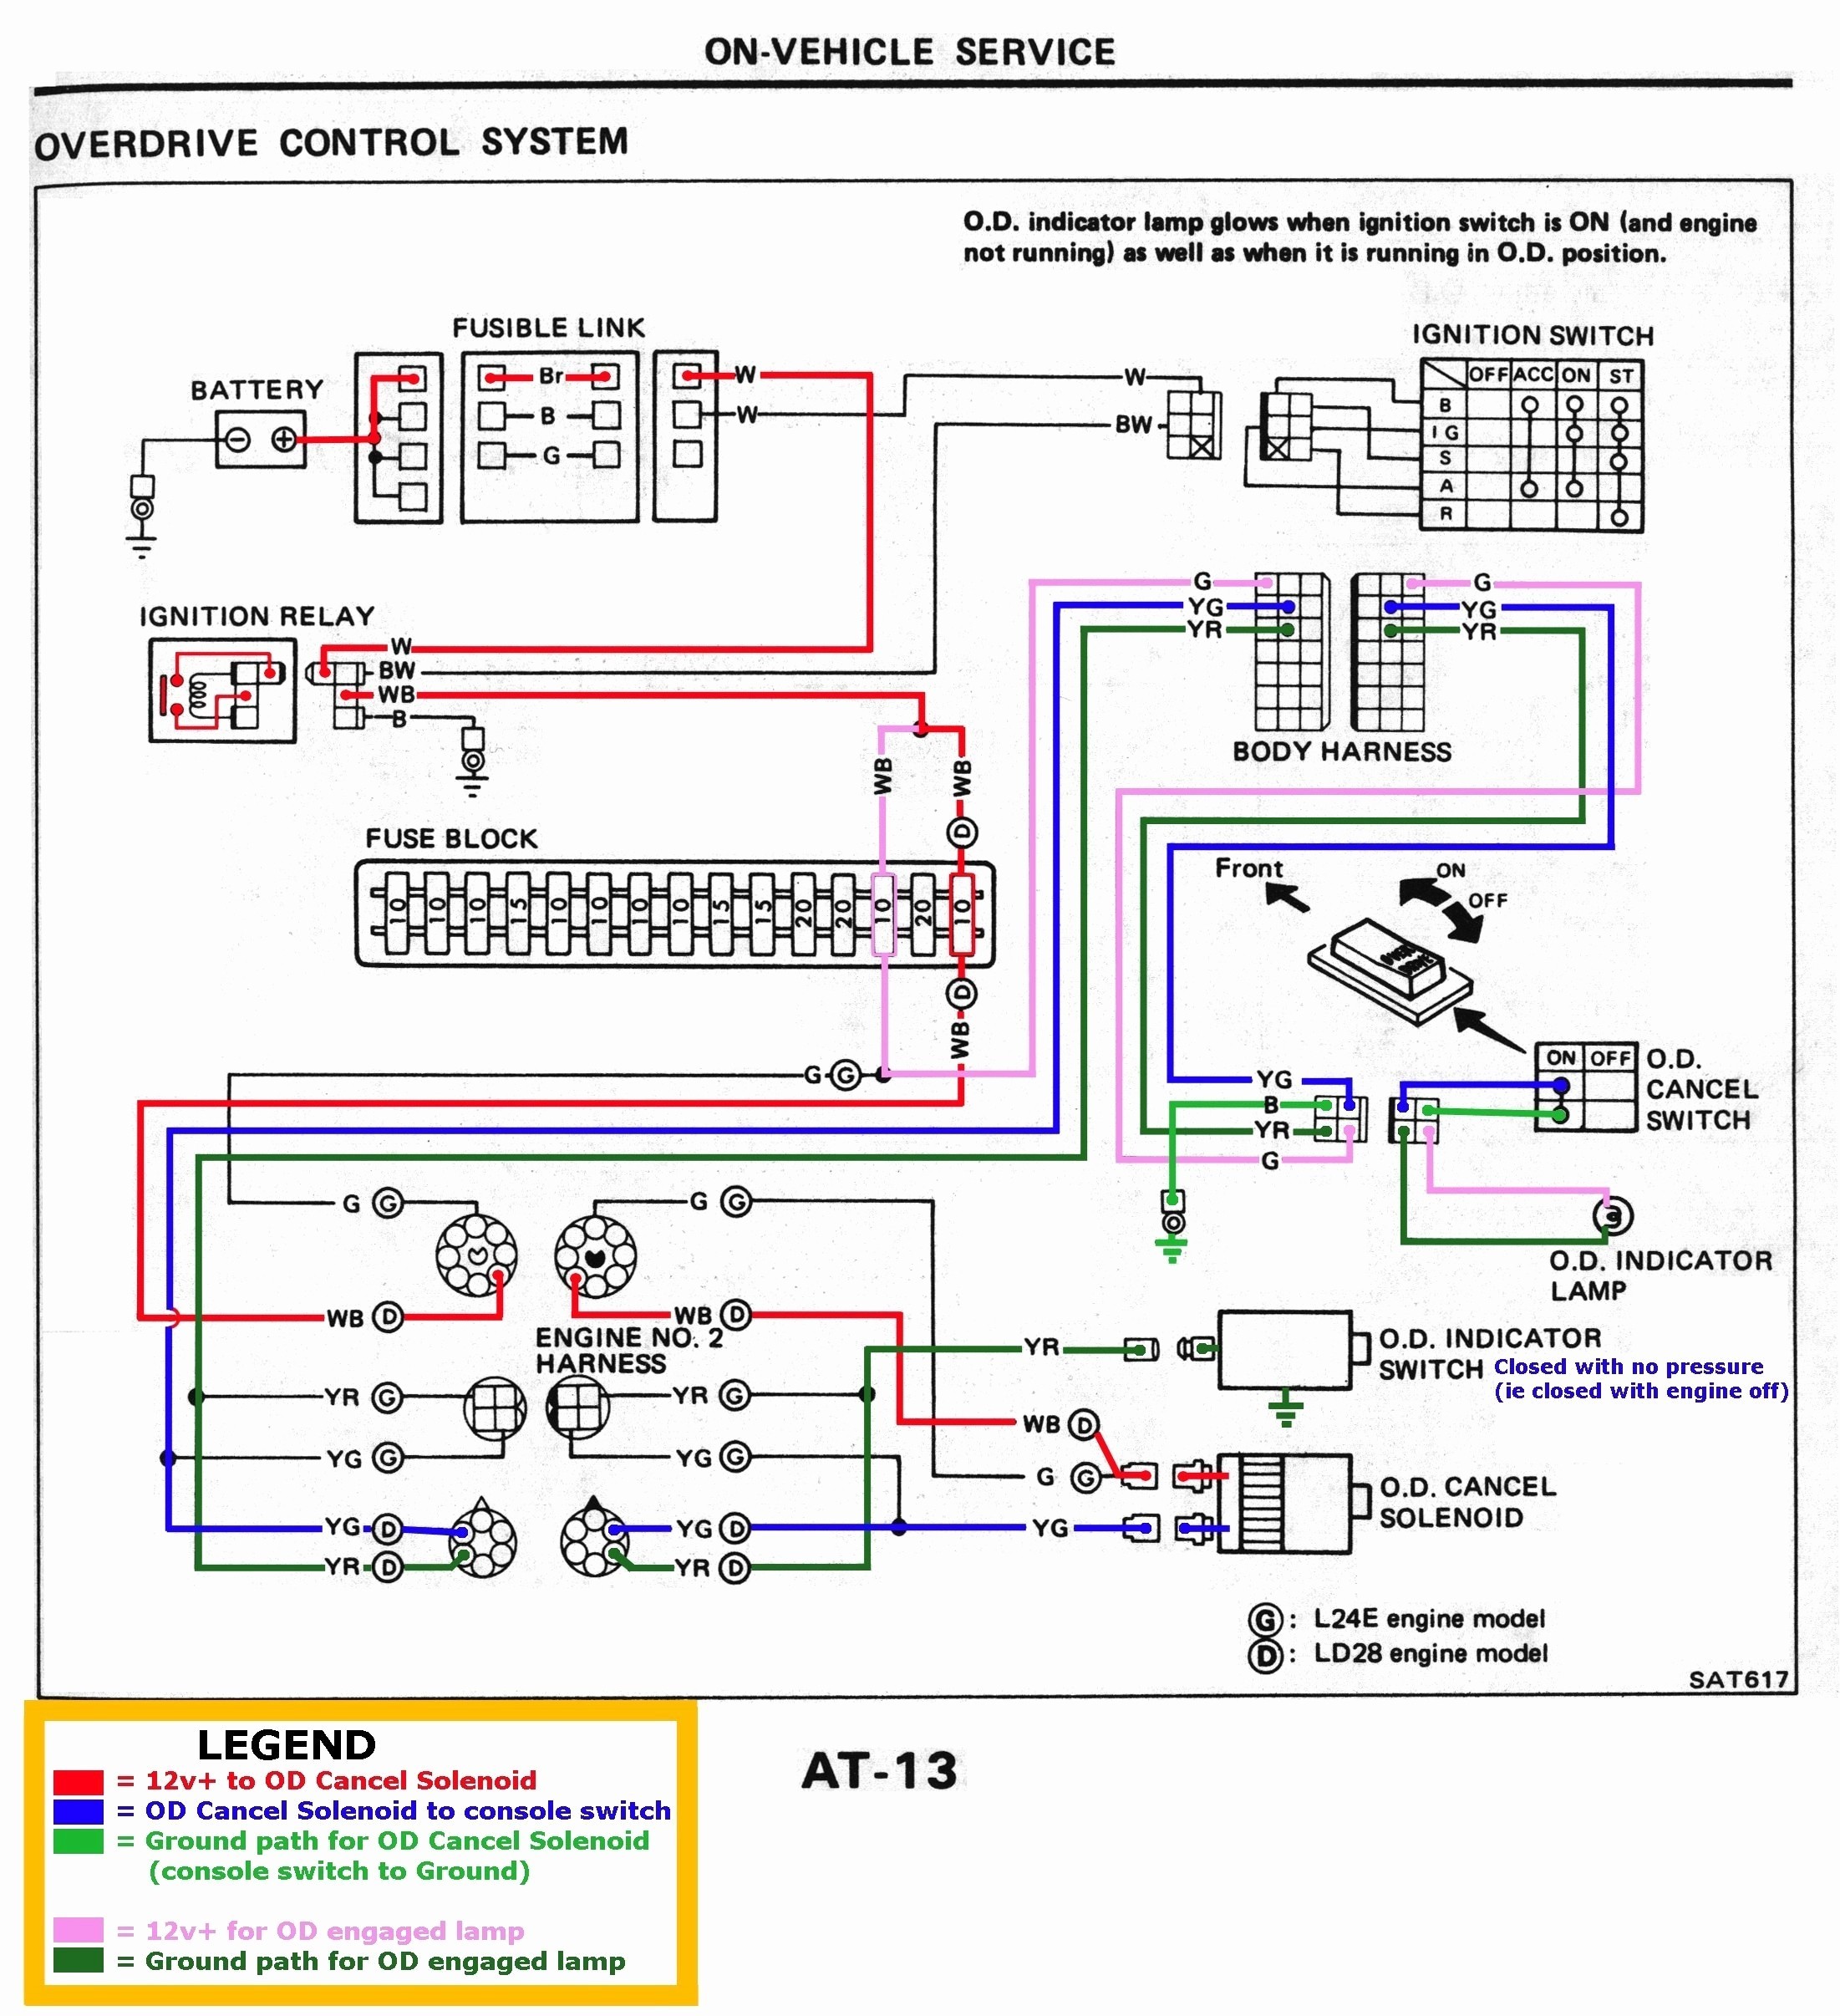 Diagram Of A Car Engine 2 Stroke Engine Diagram Of Diagram Of A Car Engine